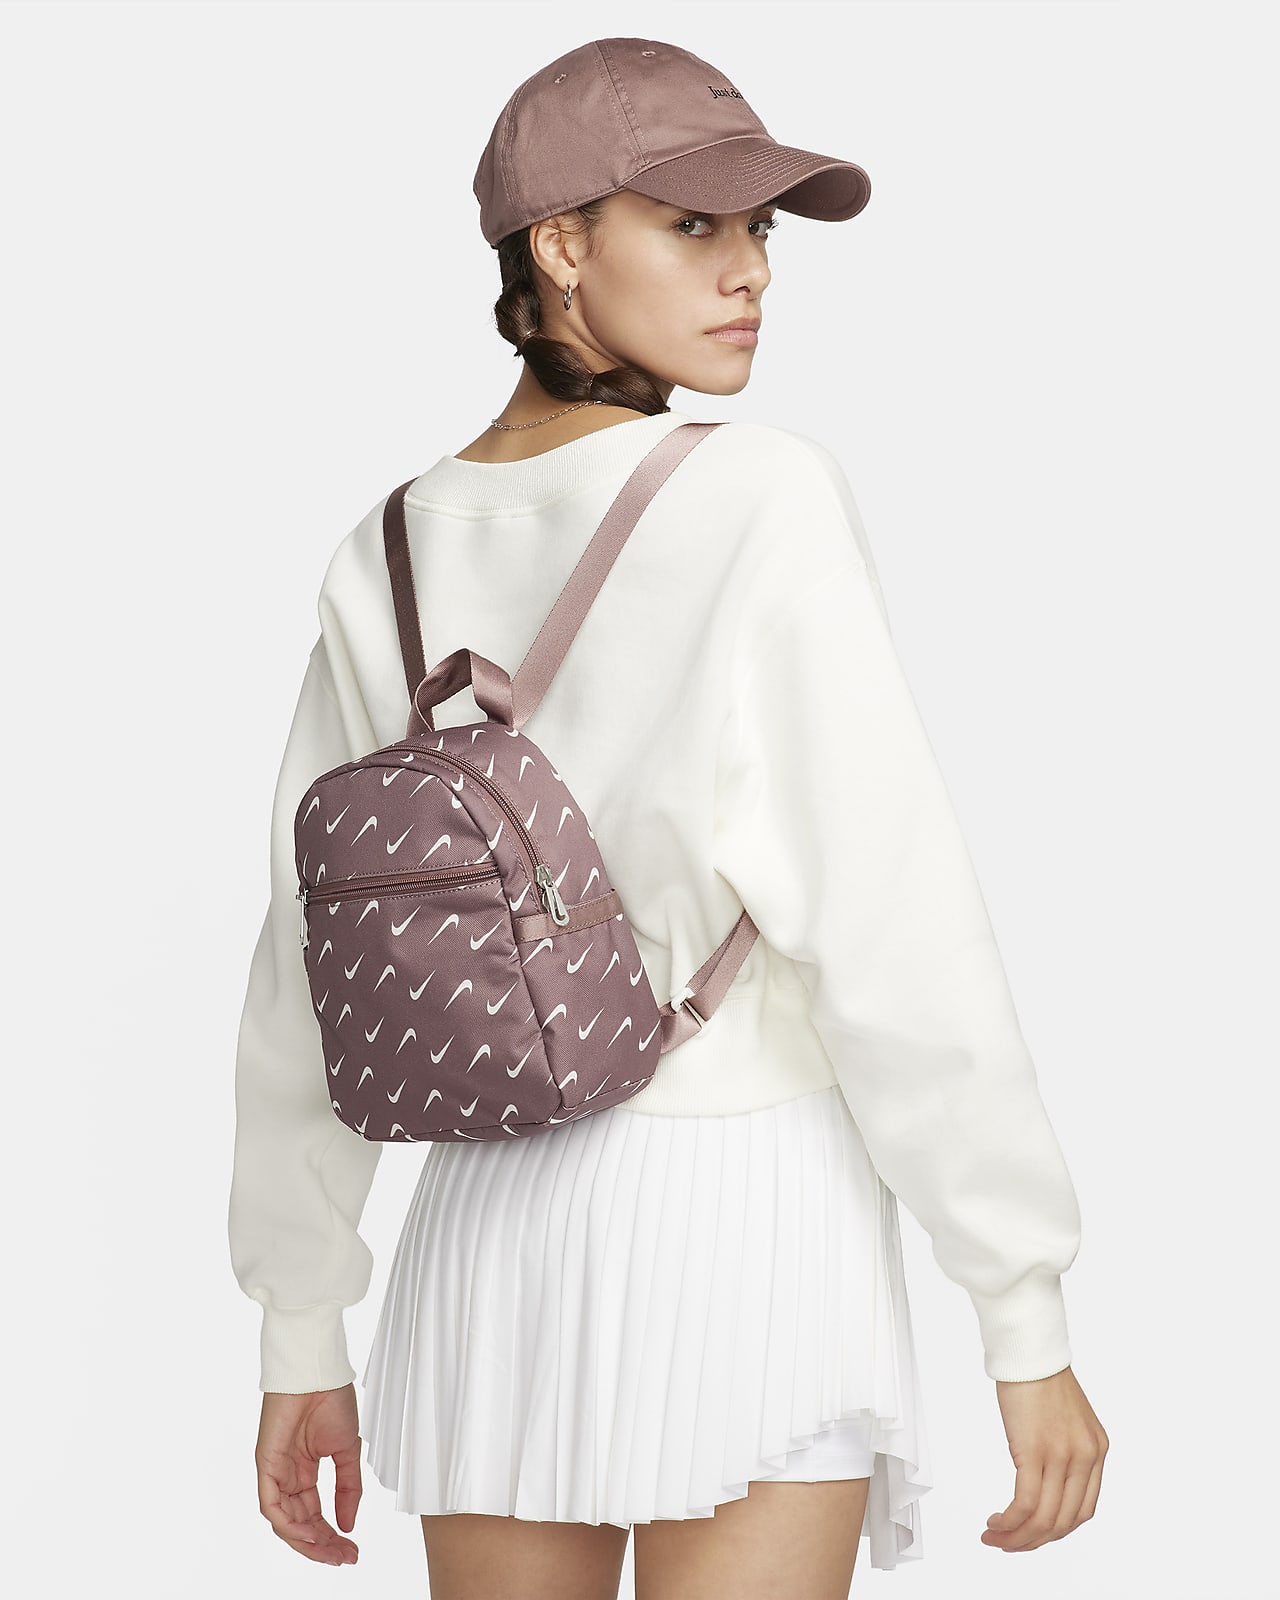 Nike Sportswear Futura 365 Mini-Rucksack für Damen (6 l)